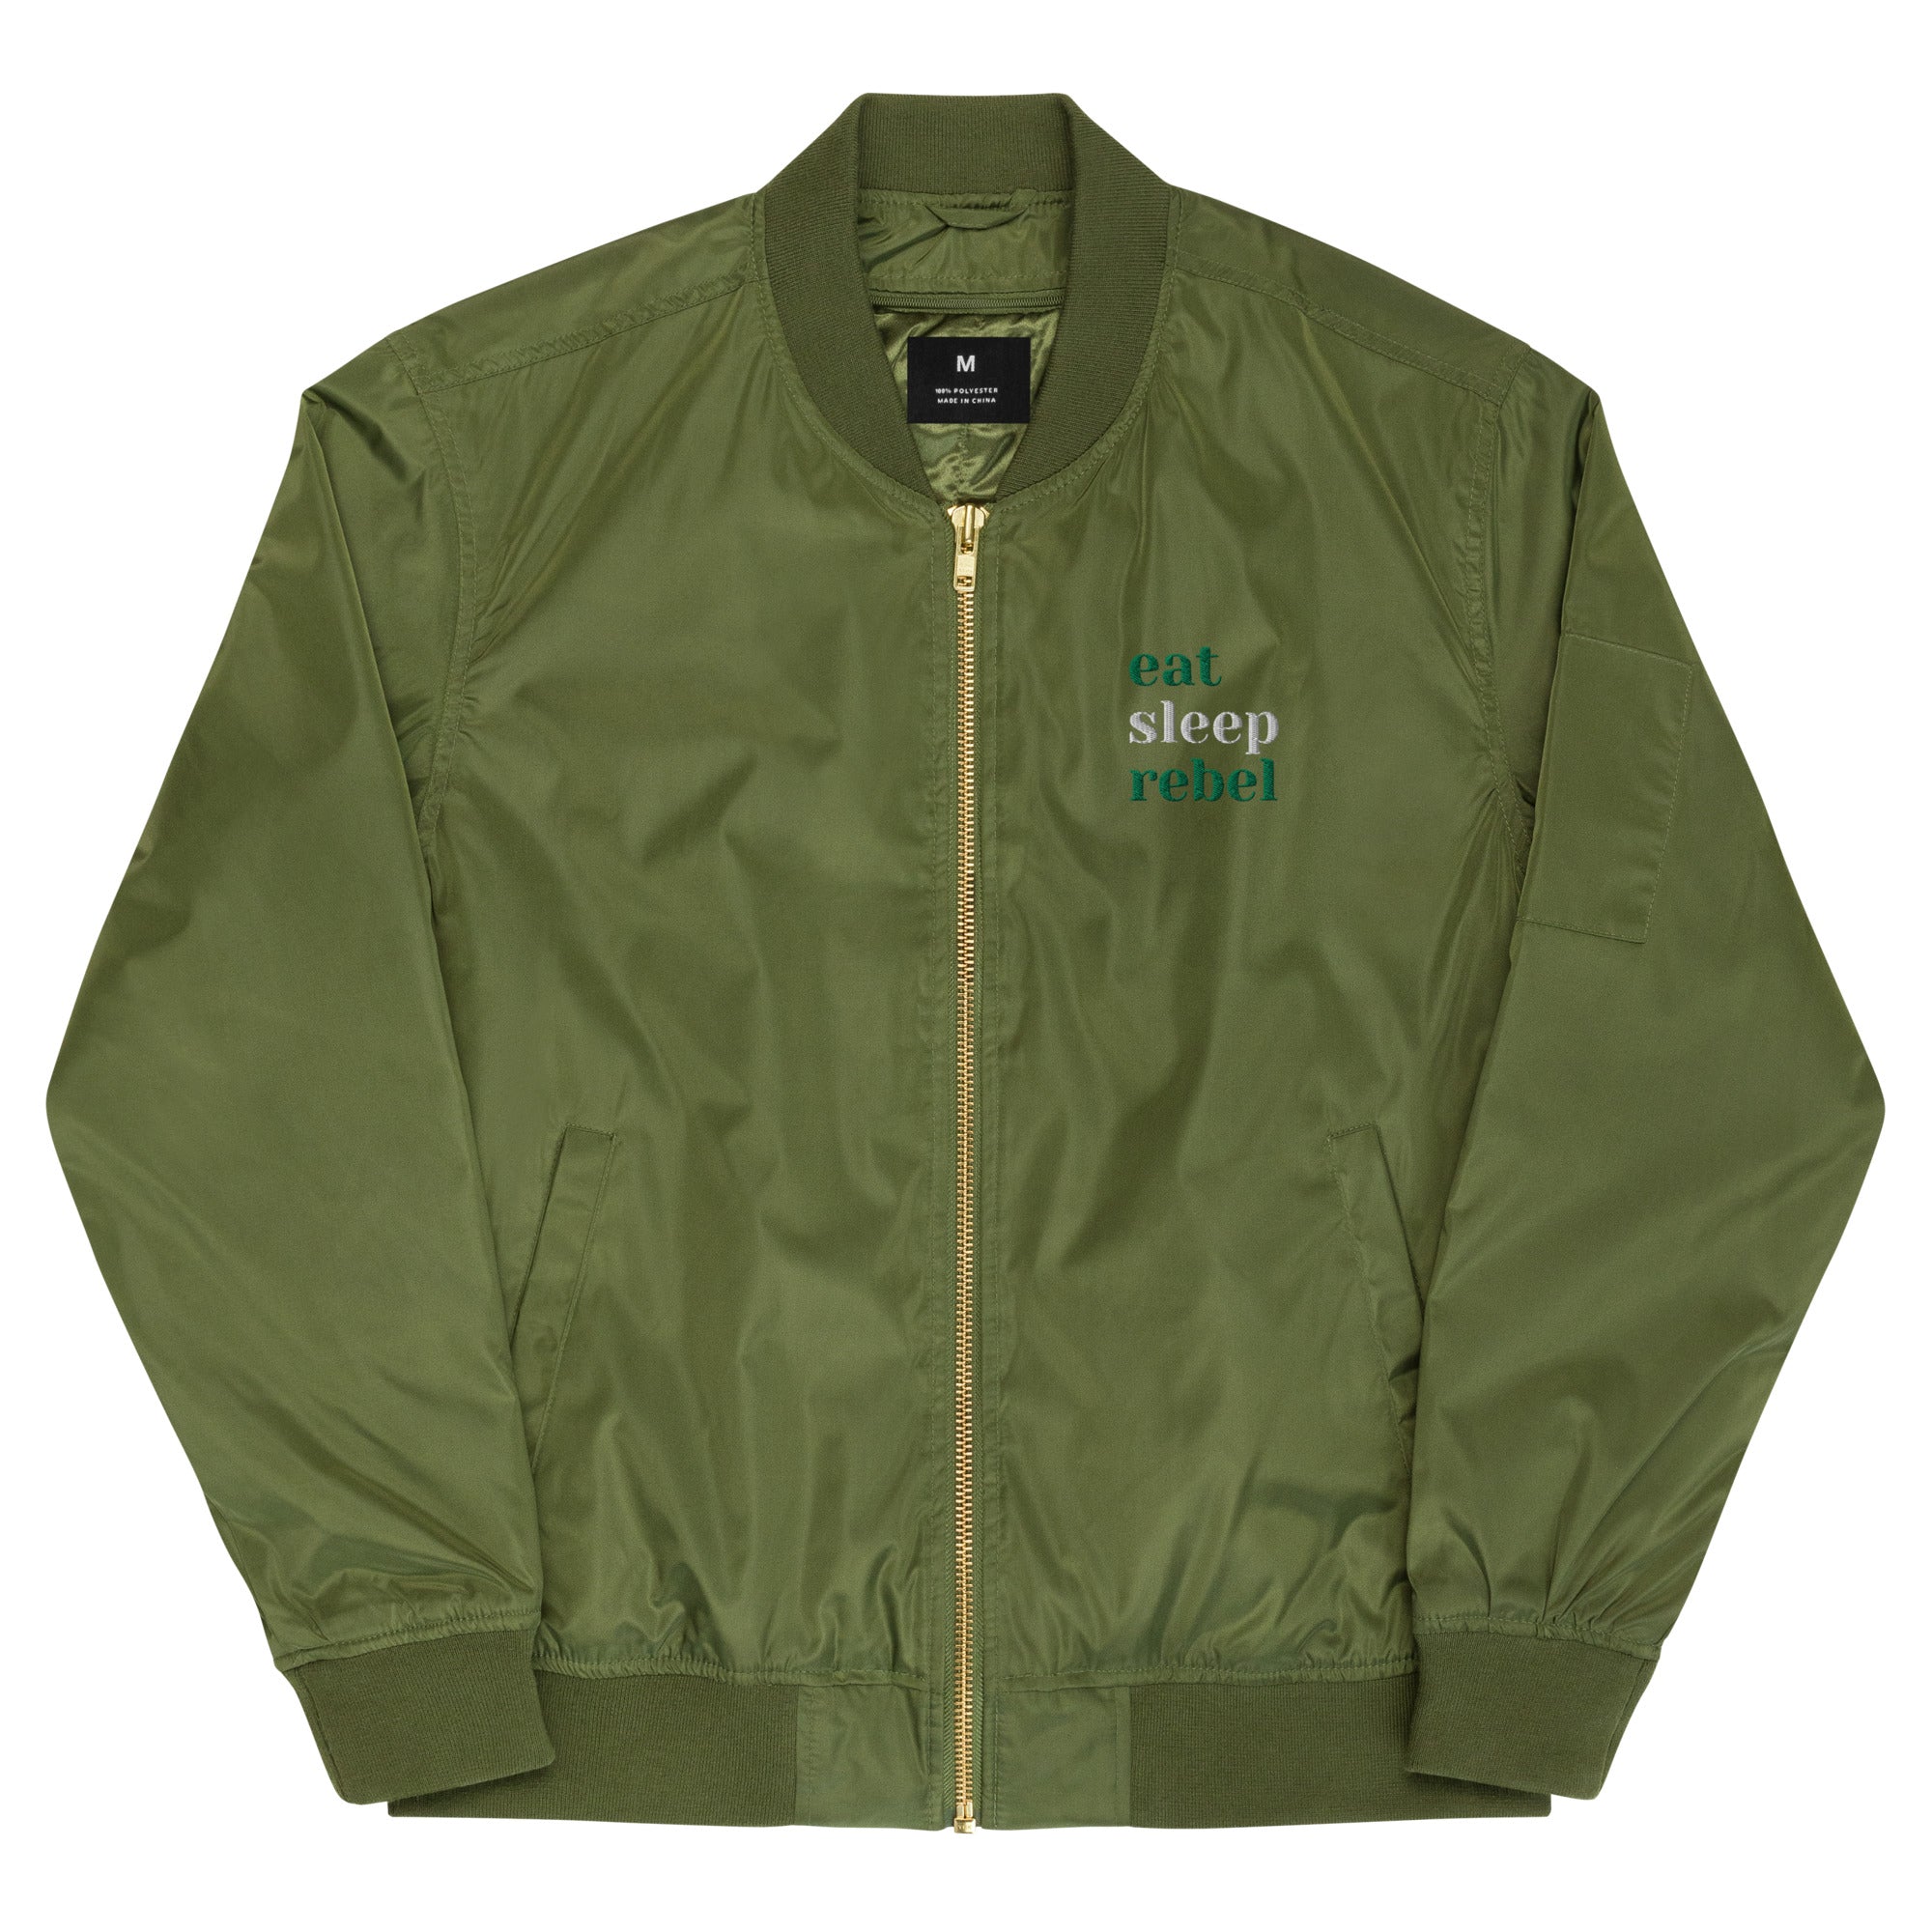 Premium recycled bomber jacket — Wilderwood Summer Camp